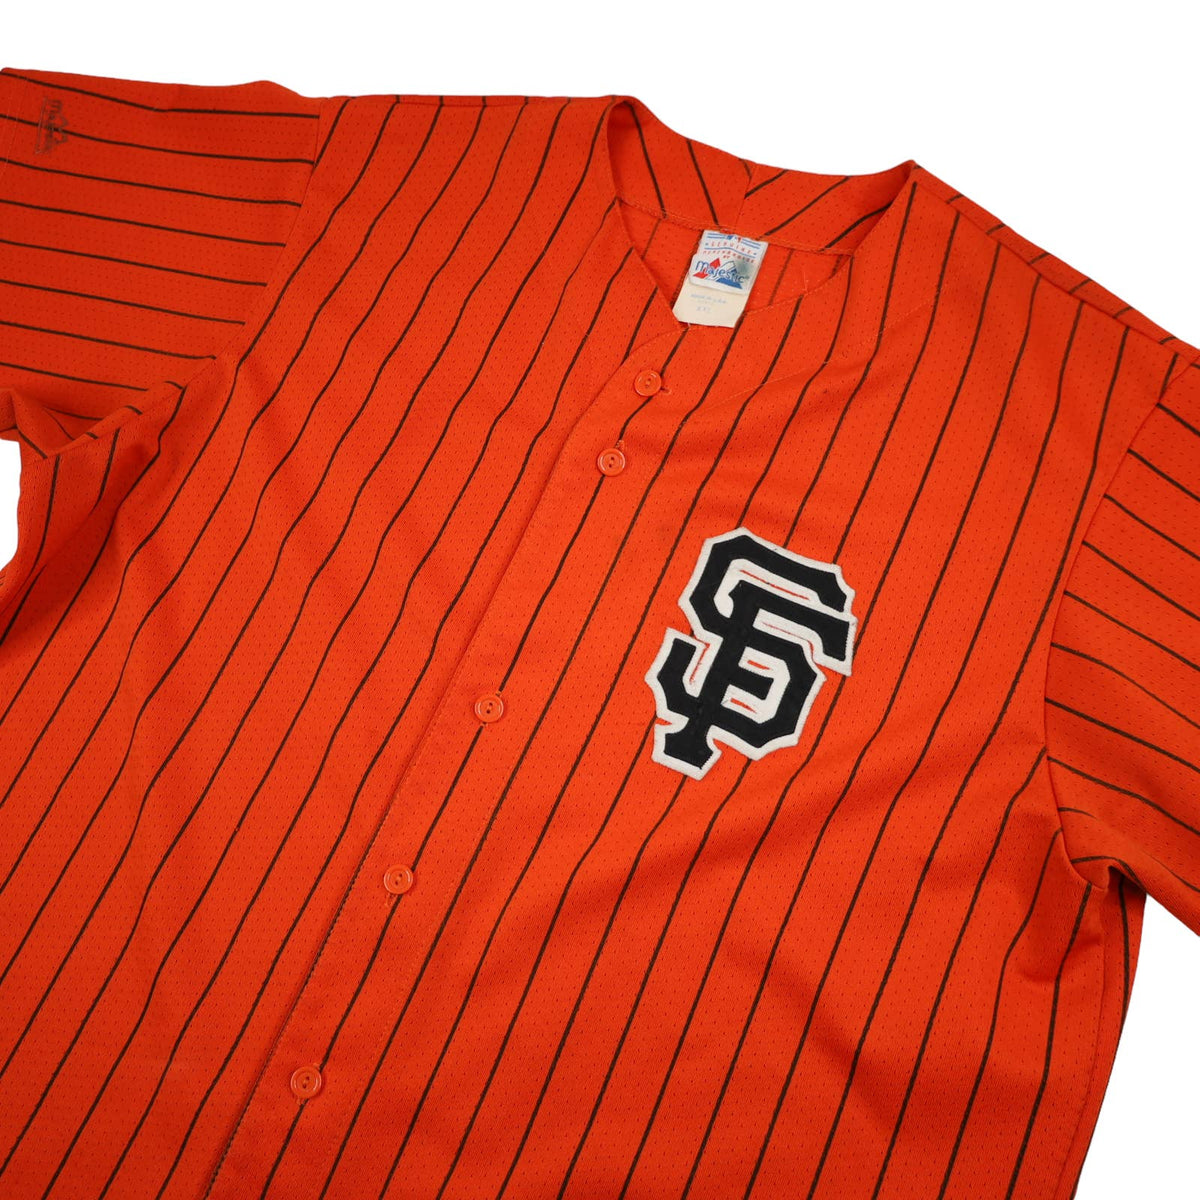 Vintage San Francisco Giants baseball jersey by Majestic size S 6700 MLB